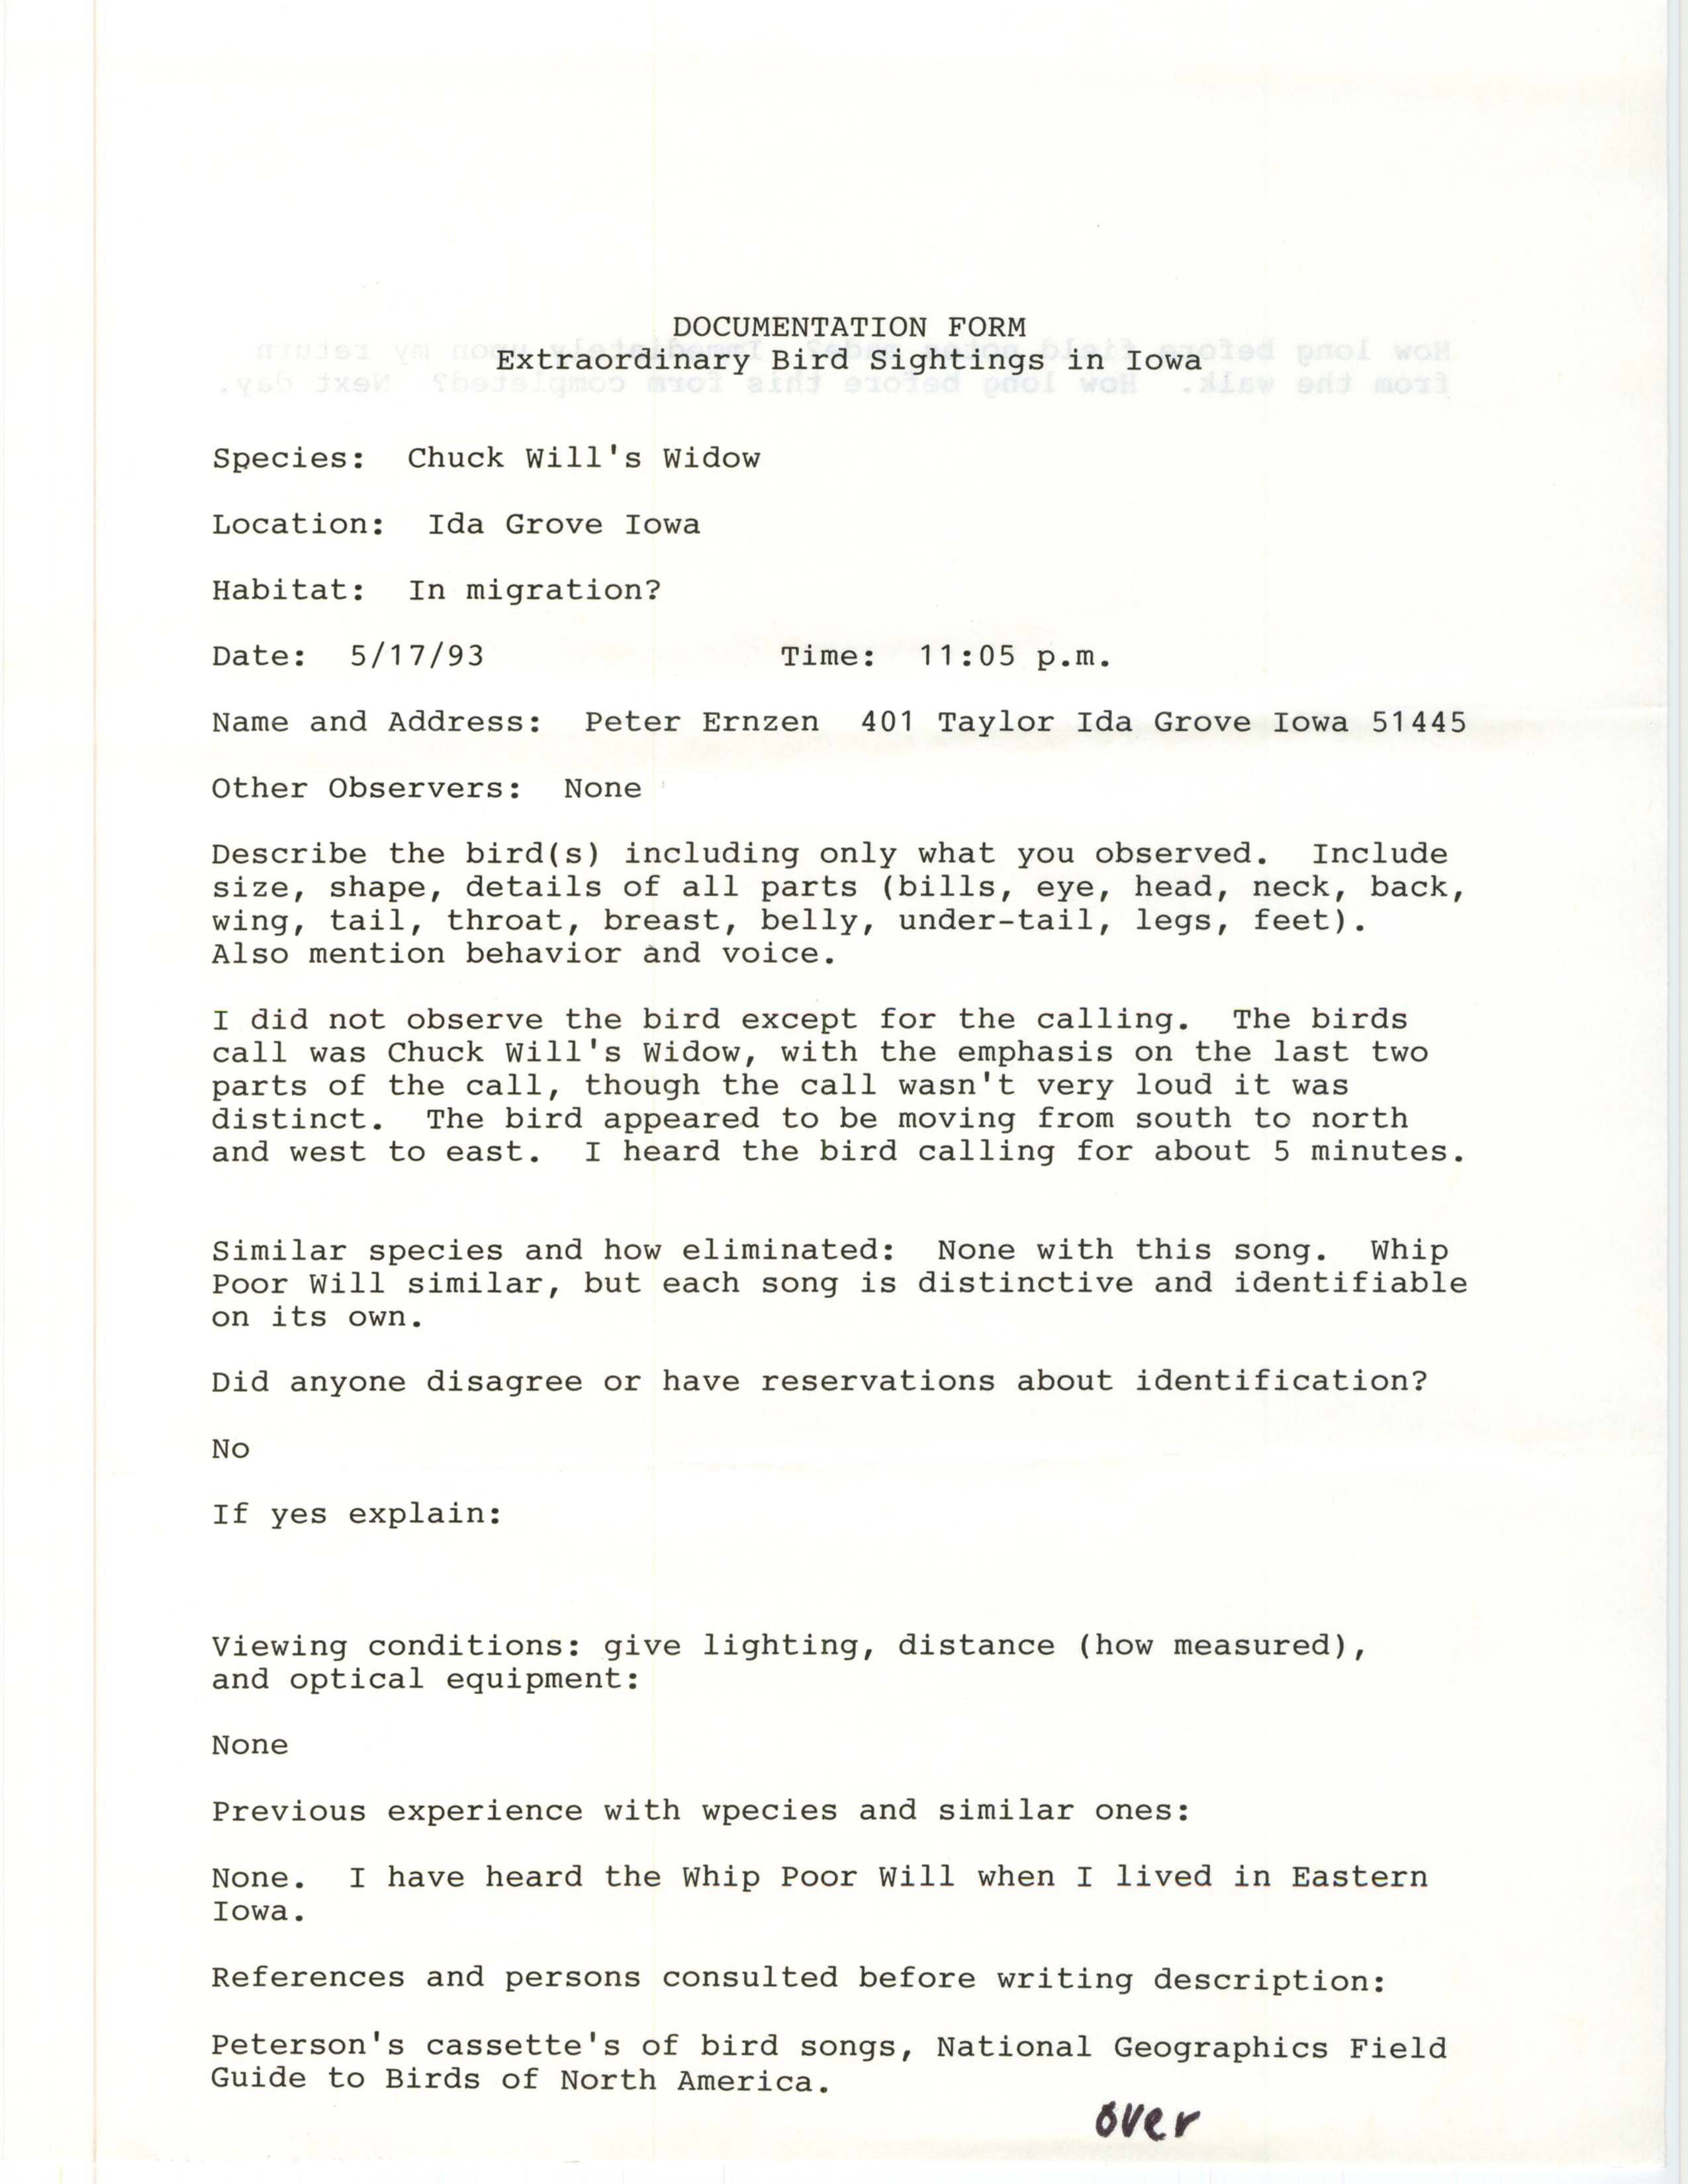 Rare bird documentation form for Chuck-will's Widow at Ida Grove, 1993